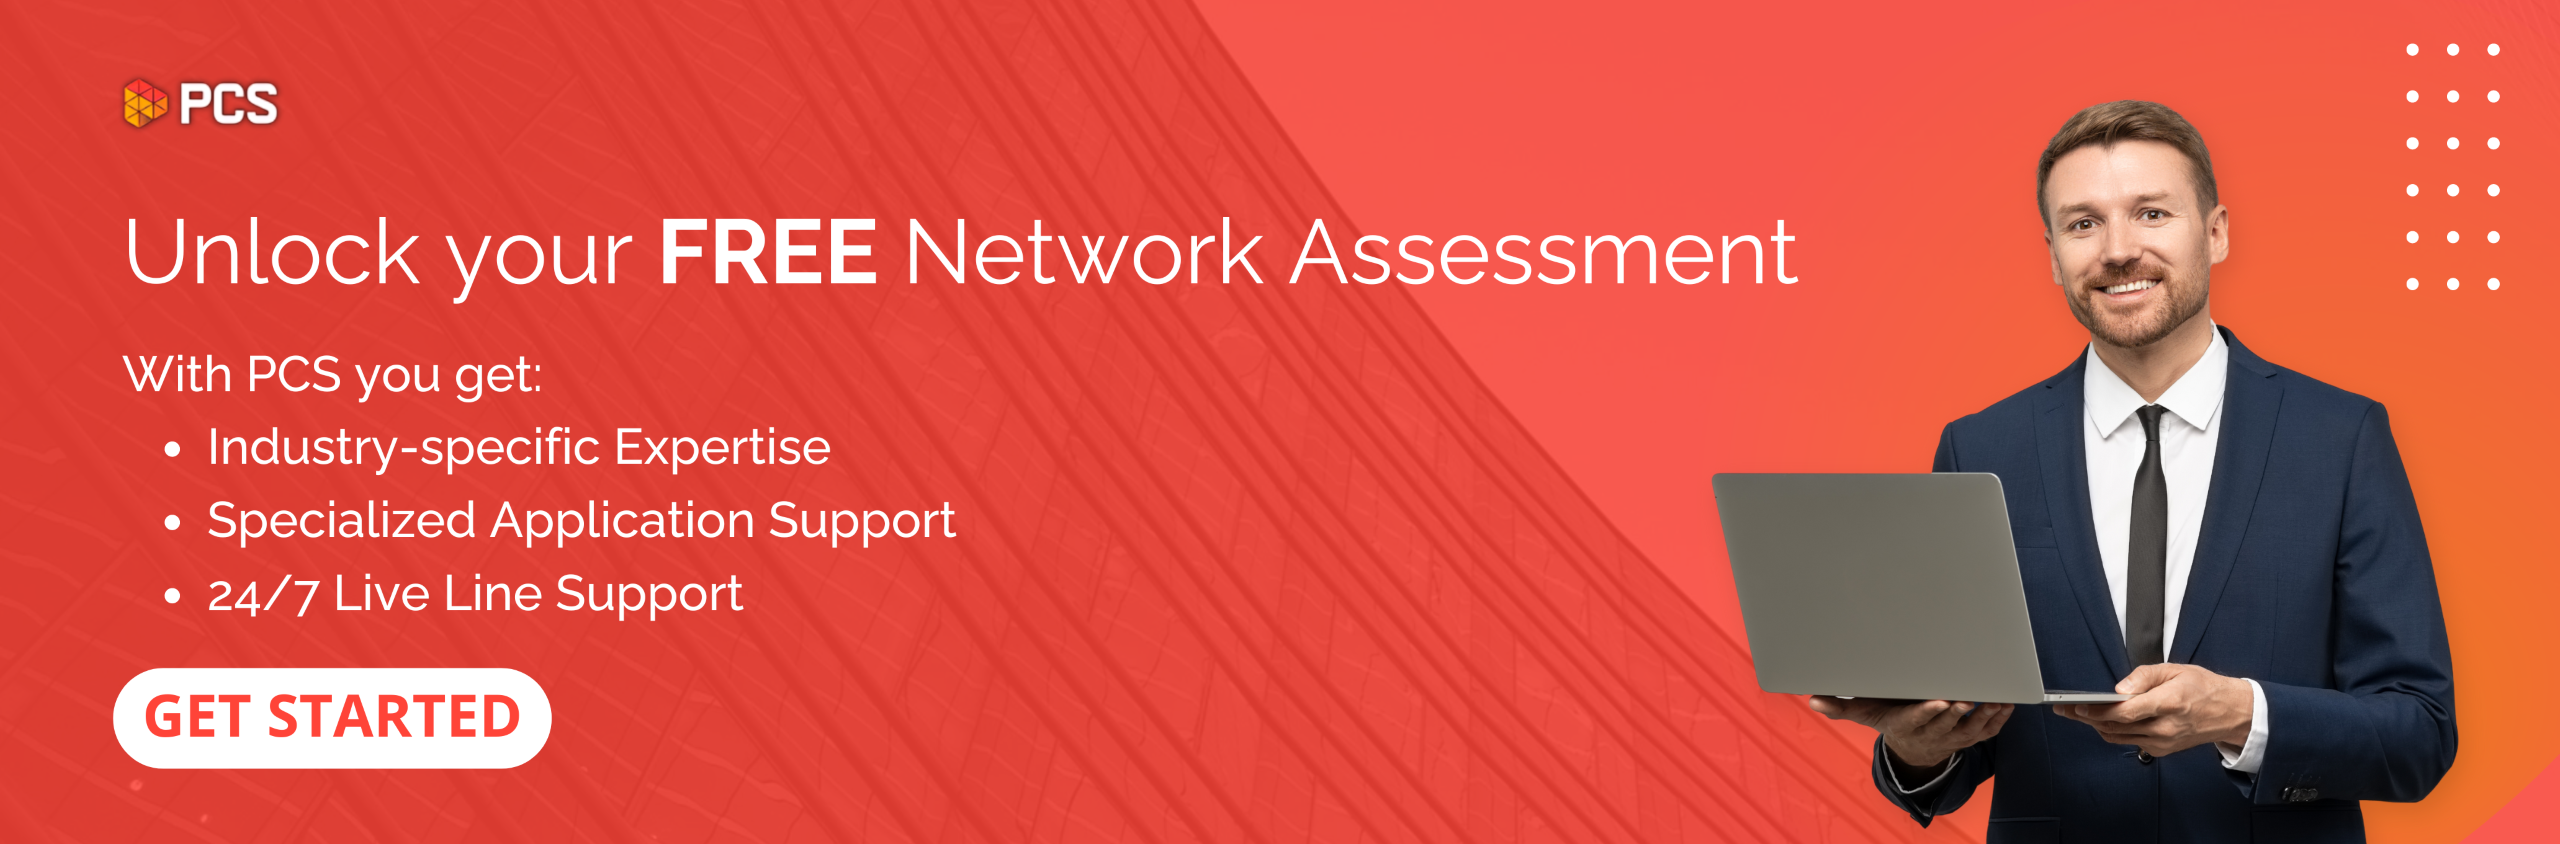 Free Network Assessment